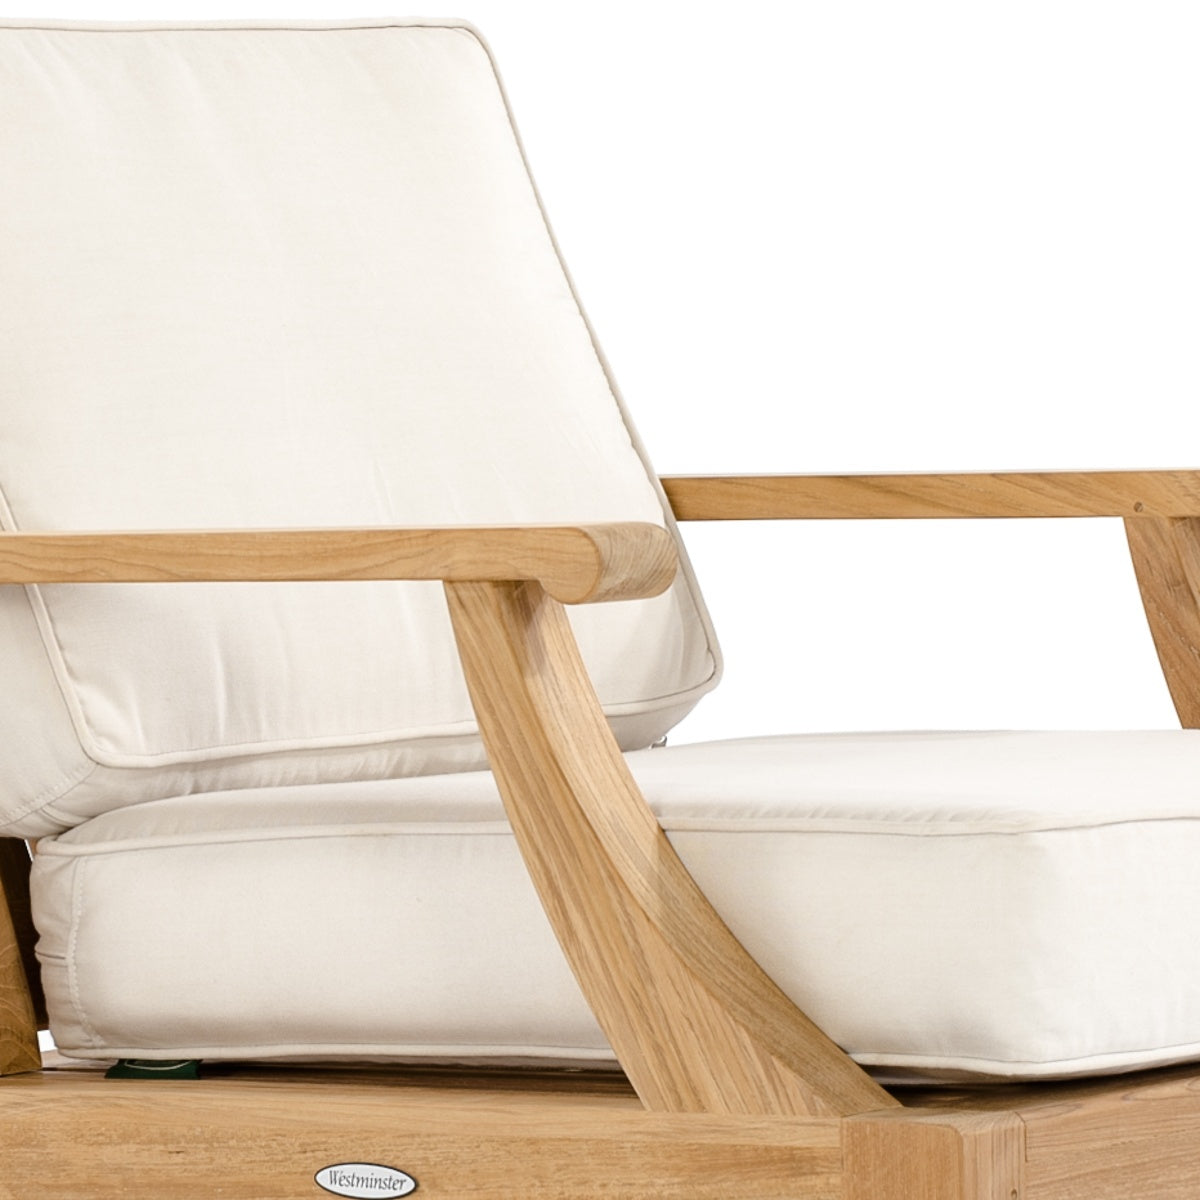 Westminster Teak - Laguna 7 Piece Luxury Sofa Set, with Sunbrella fabric - 70105